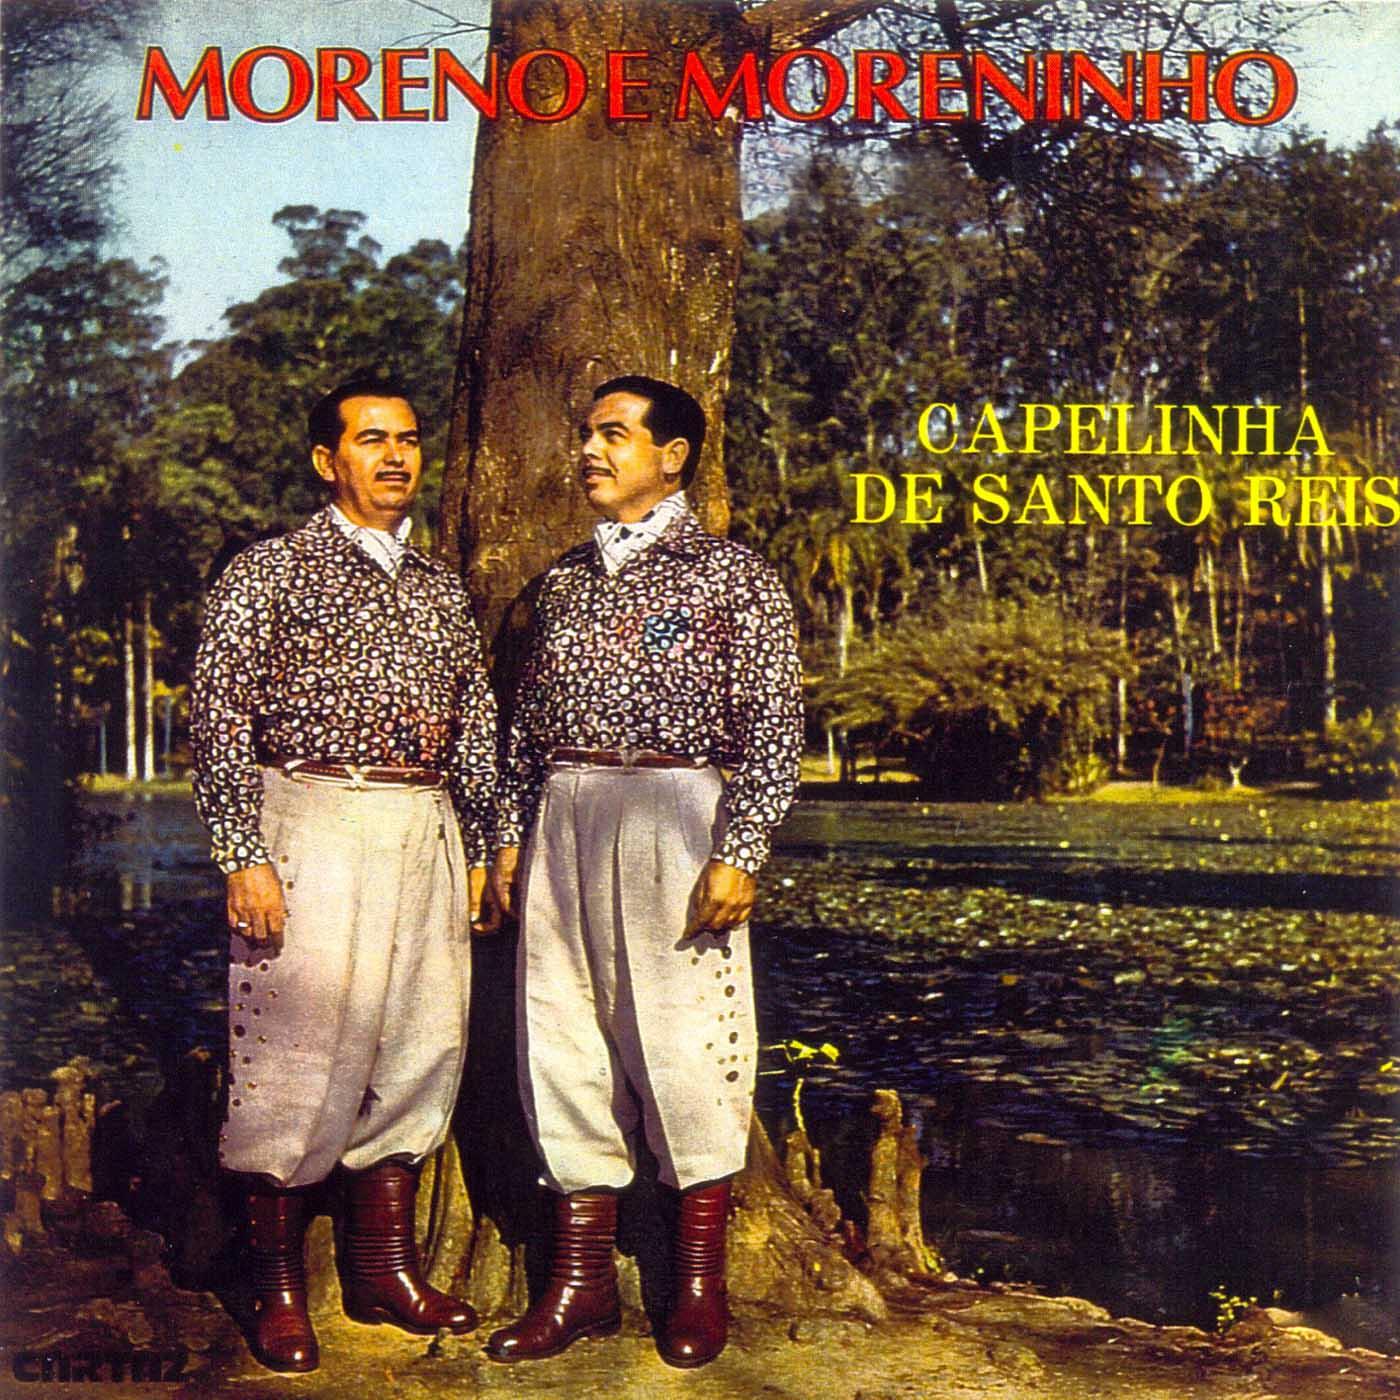 Moreno - A Chegada dos Treis Reis